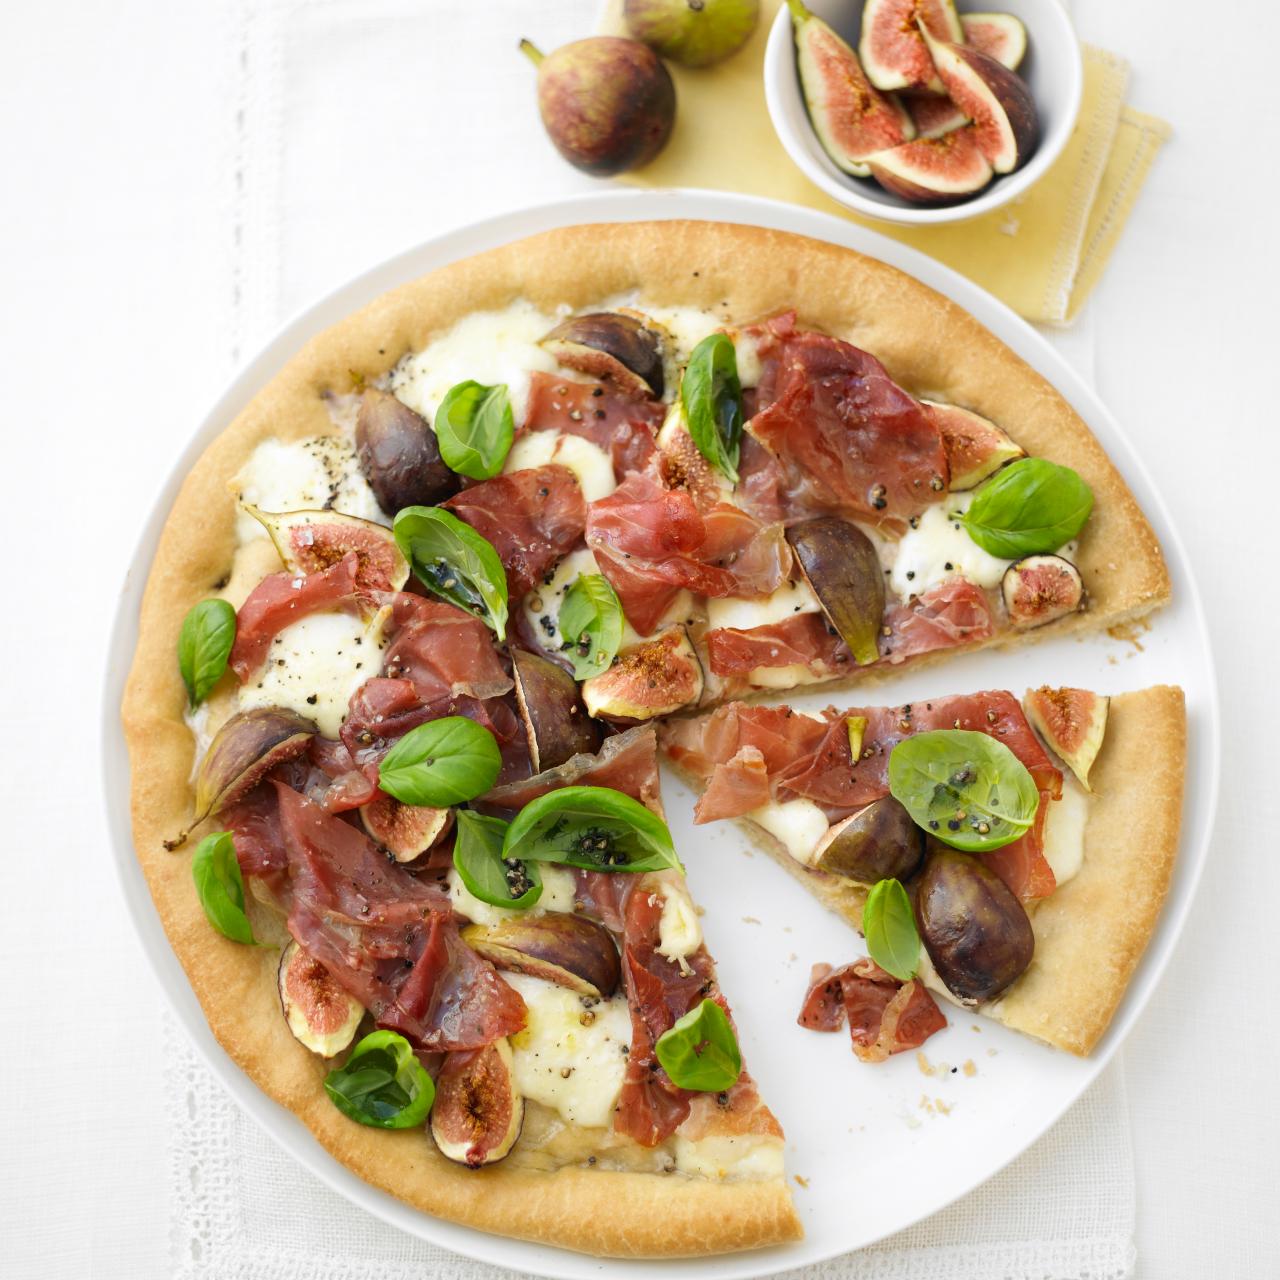 Easy Homemade Pizza Sauce With Prosciutto And Mozzarella Cheese